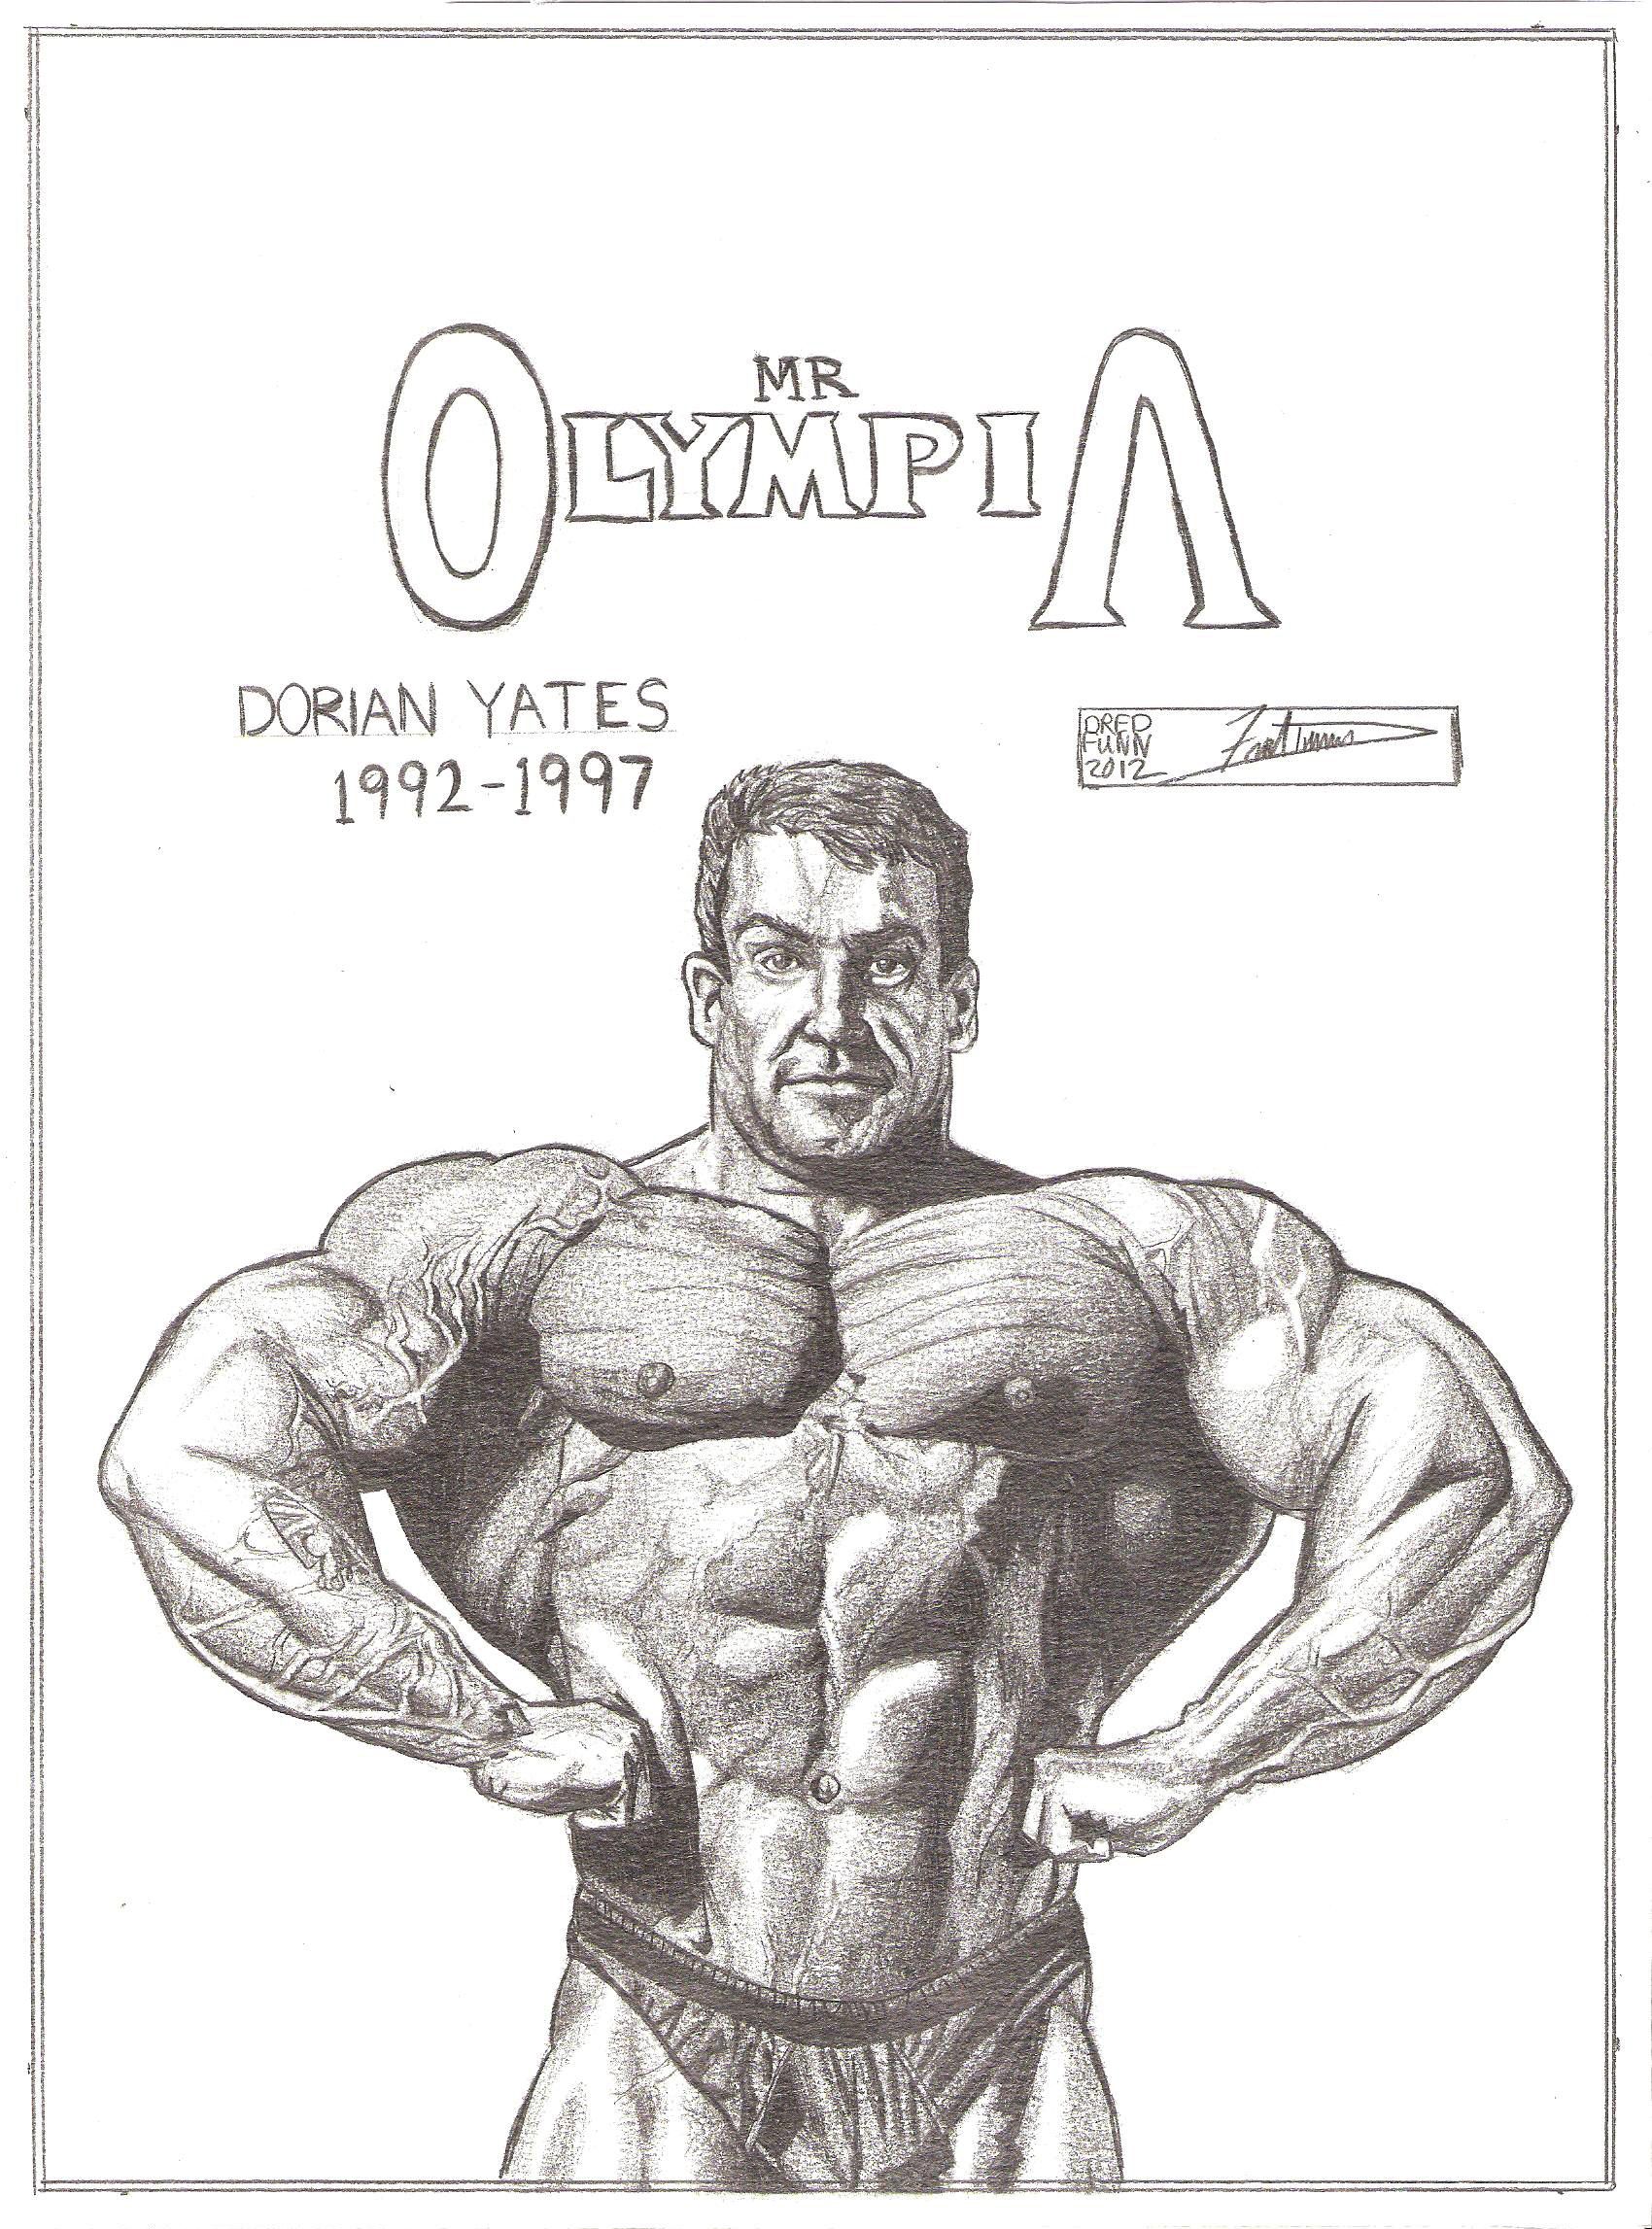 Dorian Yates - Mr Olympia Series - Dredfunn Pencil by DredFunn on ...